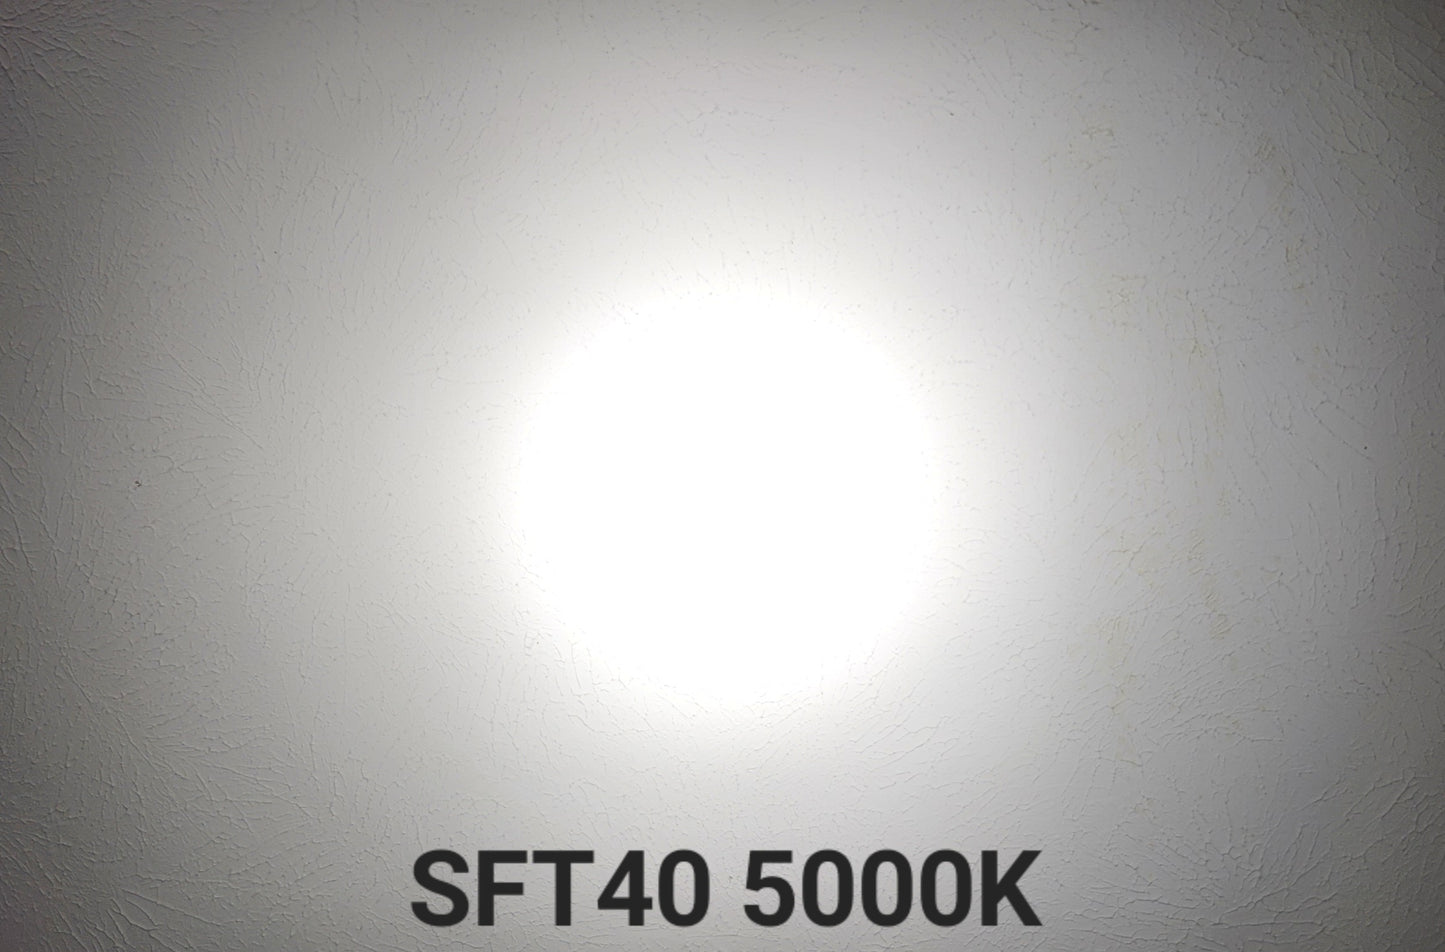 Emisar D4SV2 Luminus SFT40 26650 High Power LED Flashlight "CUSTOM BUILT-TO-ORDER"